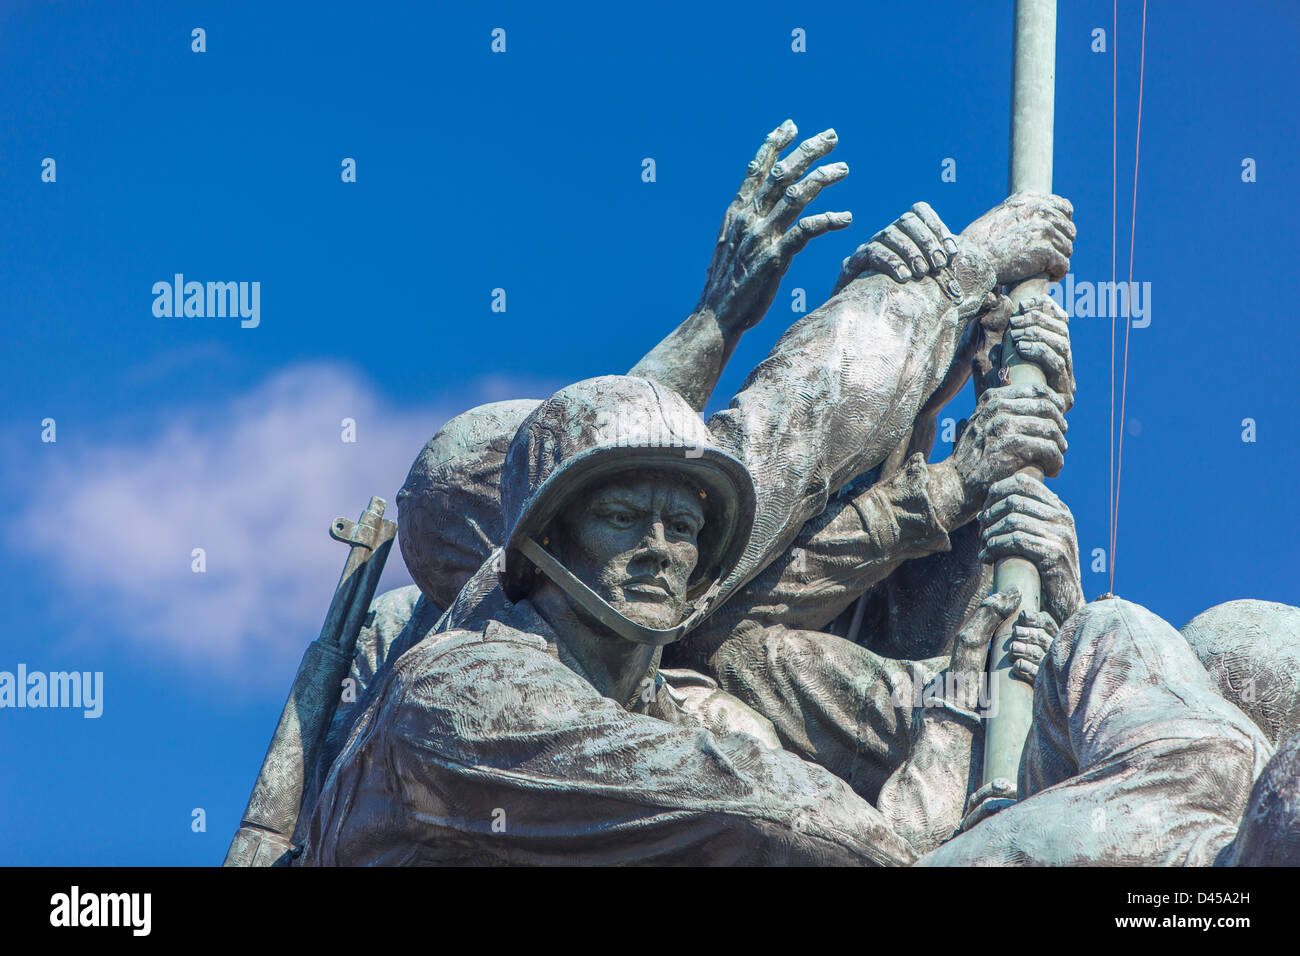 ARLINGTON, VIRGINIA, USA - Iwo Jima U.S. Marine Corps War Memorial in Rosslyn, a military memorial statue. Stock Photo